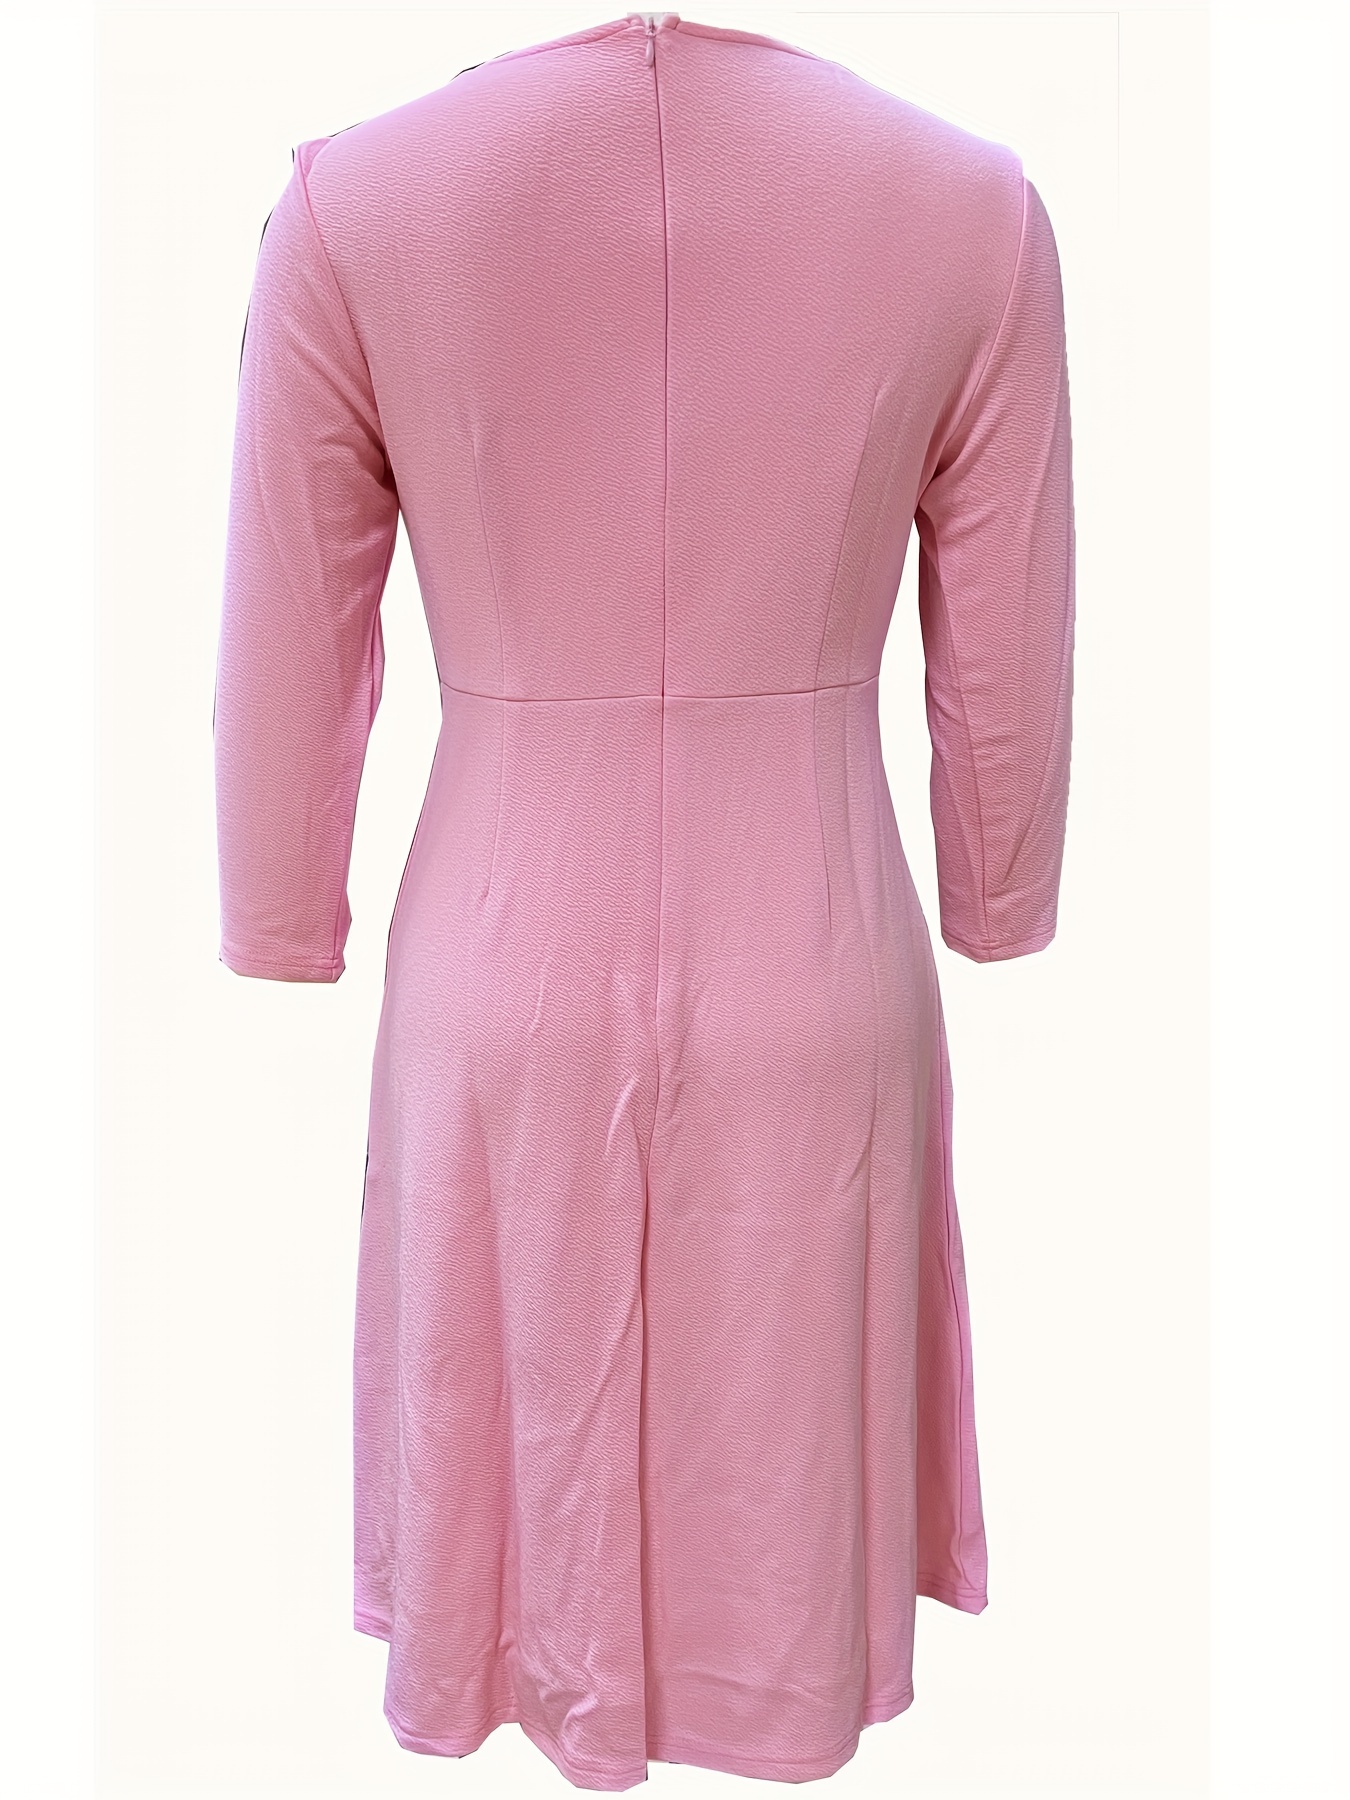 polka dot print splicing dress elegant 3 4 sleeve midi dress womens clothing